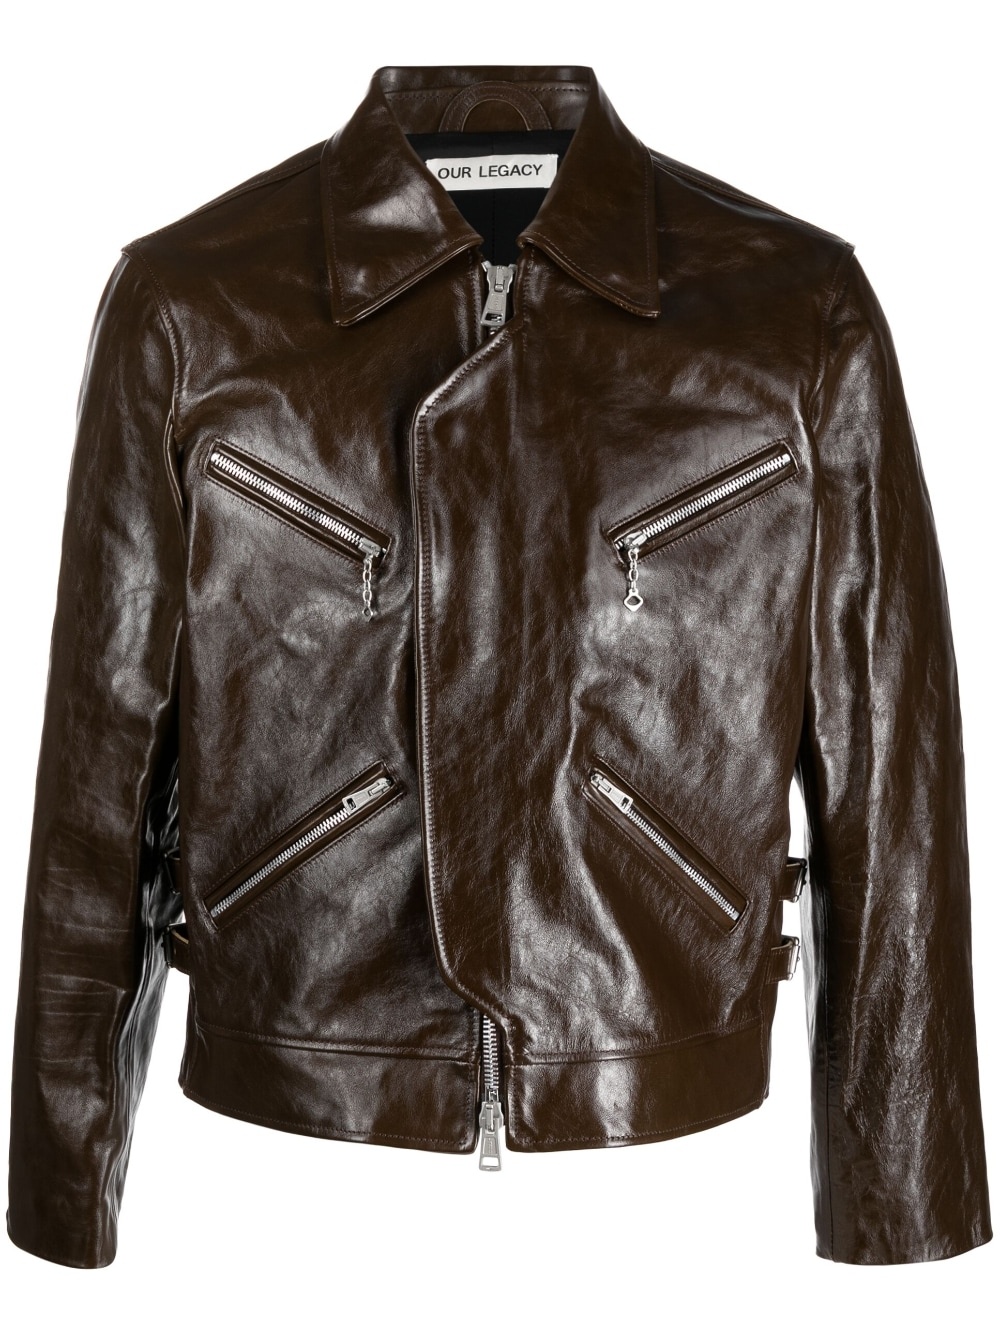 narrow leather jacket - 1